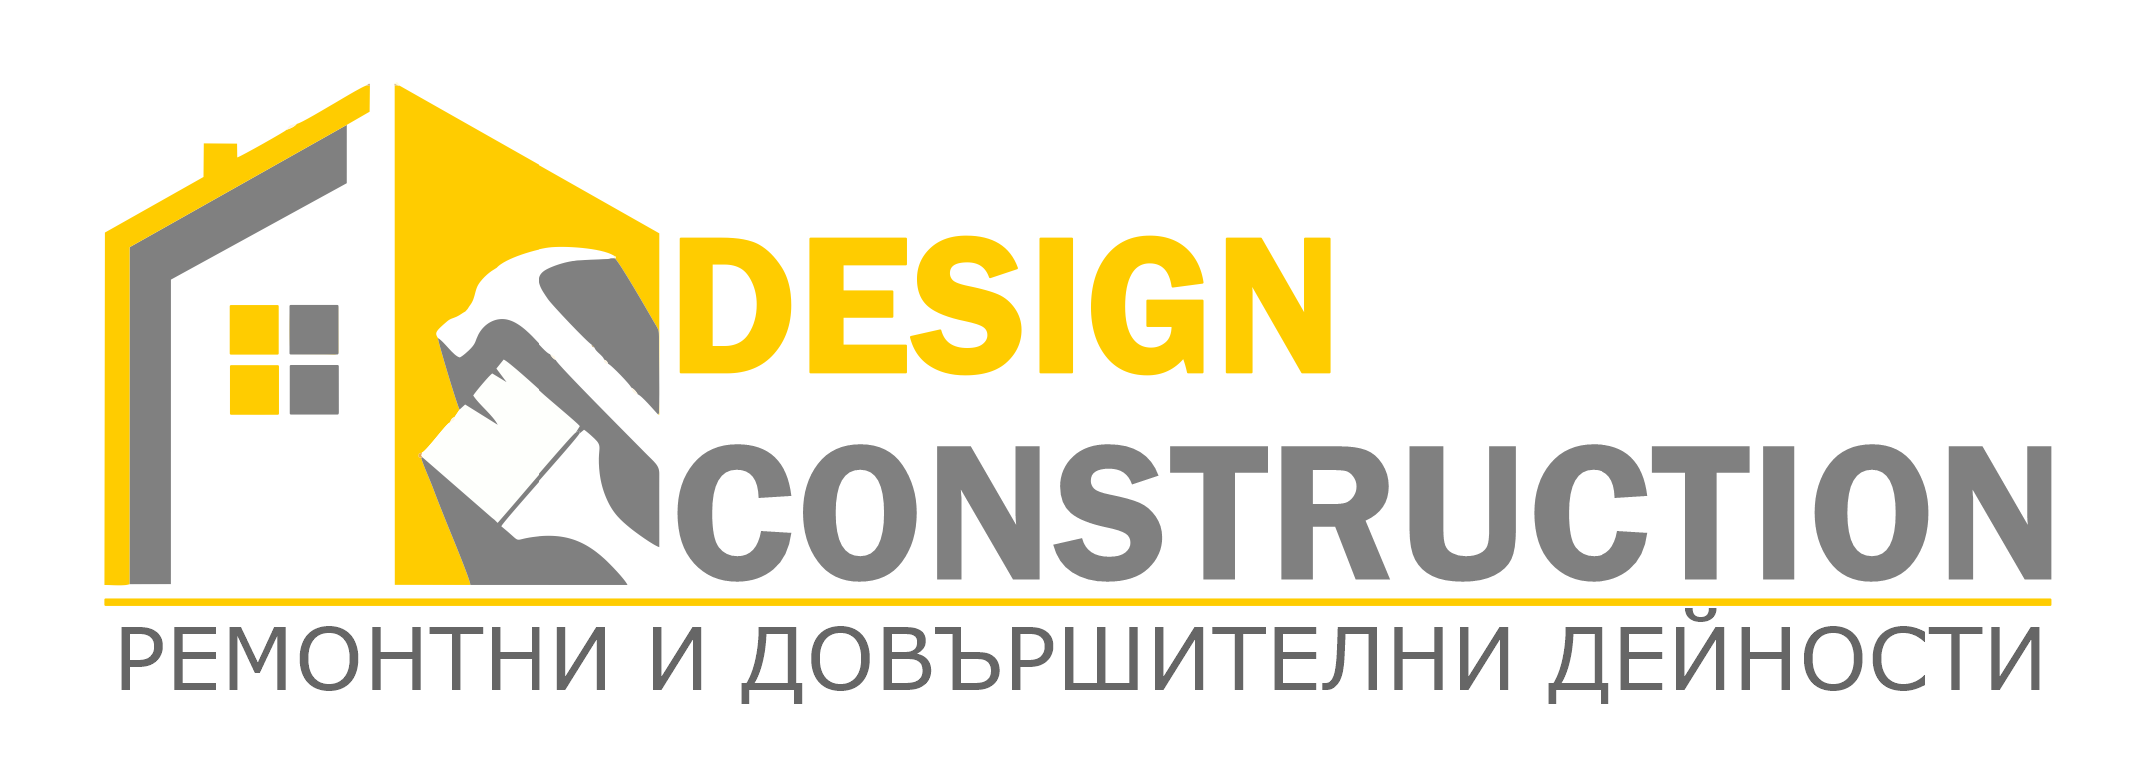 543-final-logo-design-constrhjhjhjhj-16463929119559.png